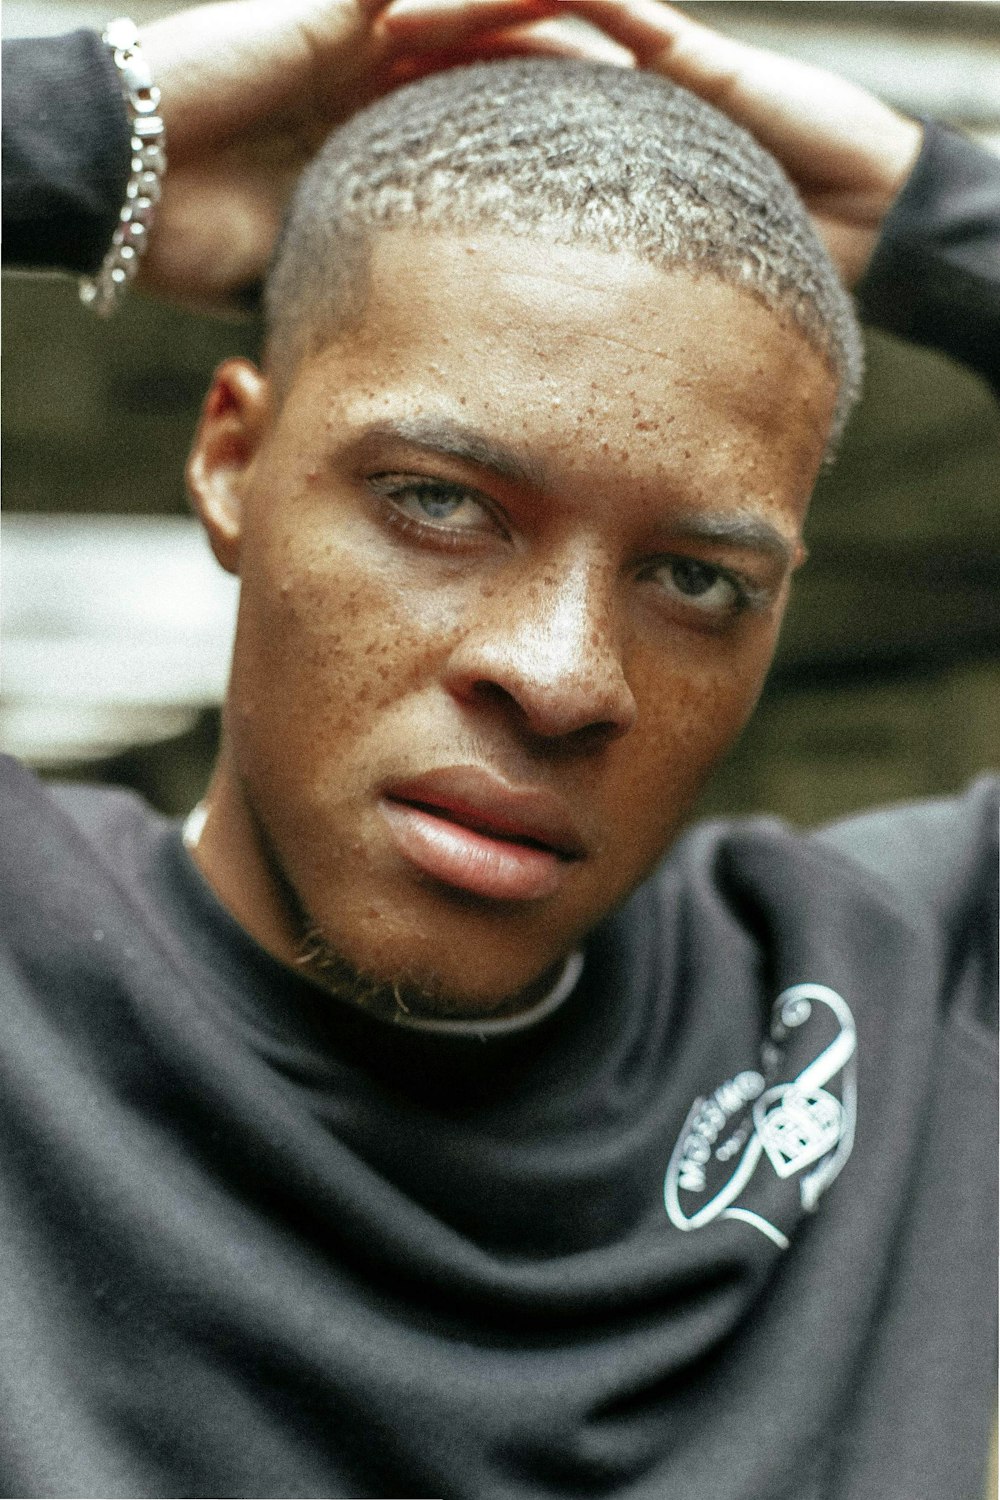 man in black crew neck shirt photo – Free Portrait Image on Unsplash